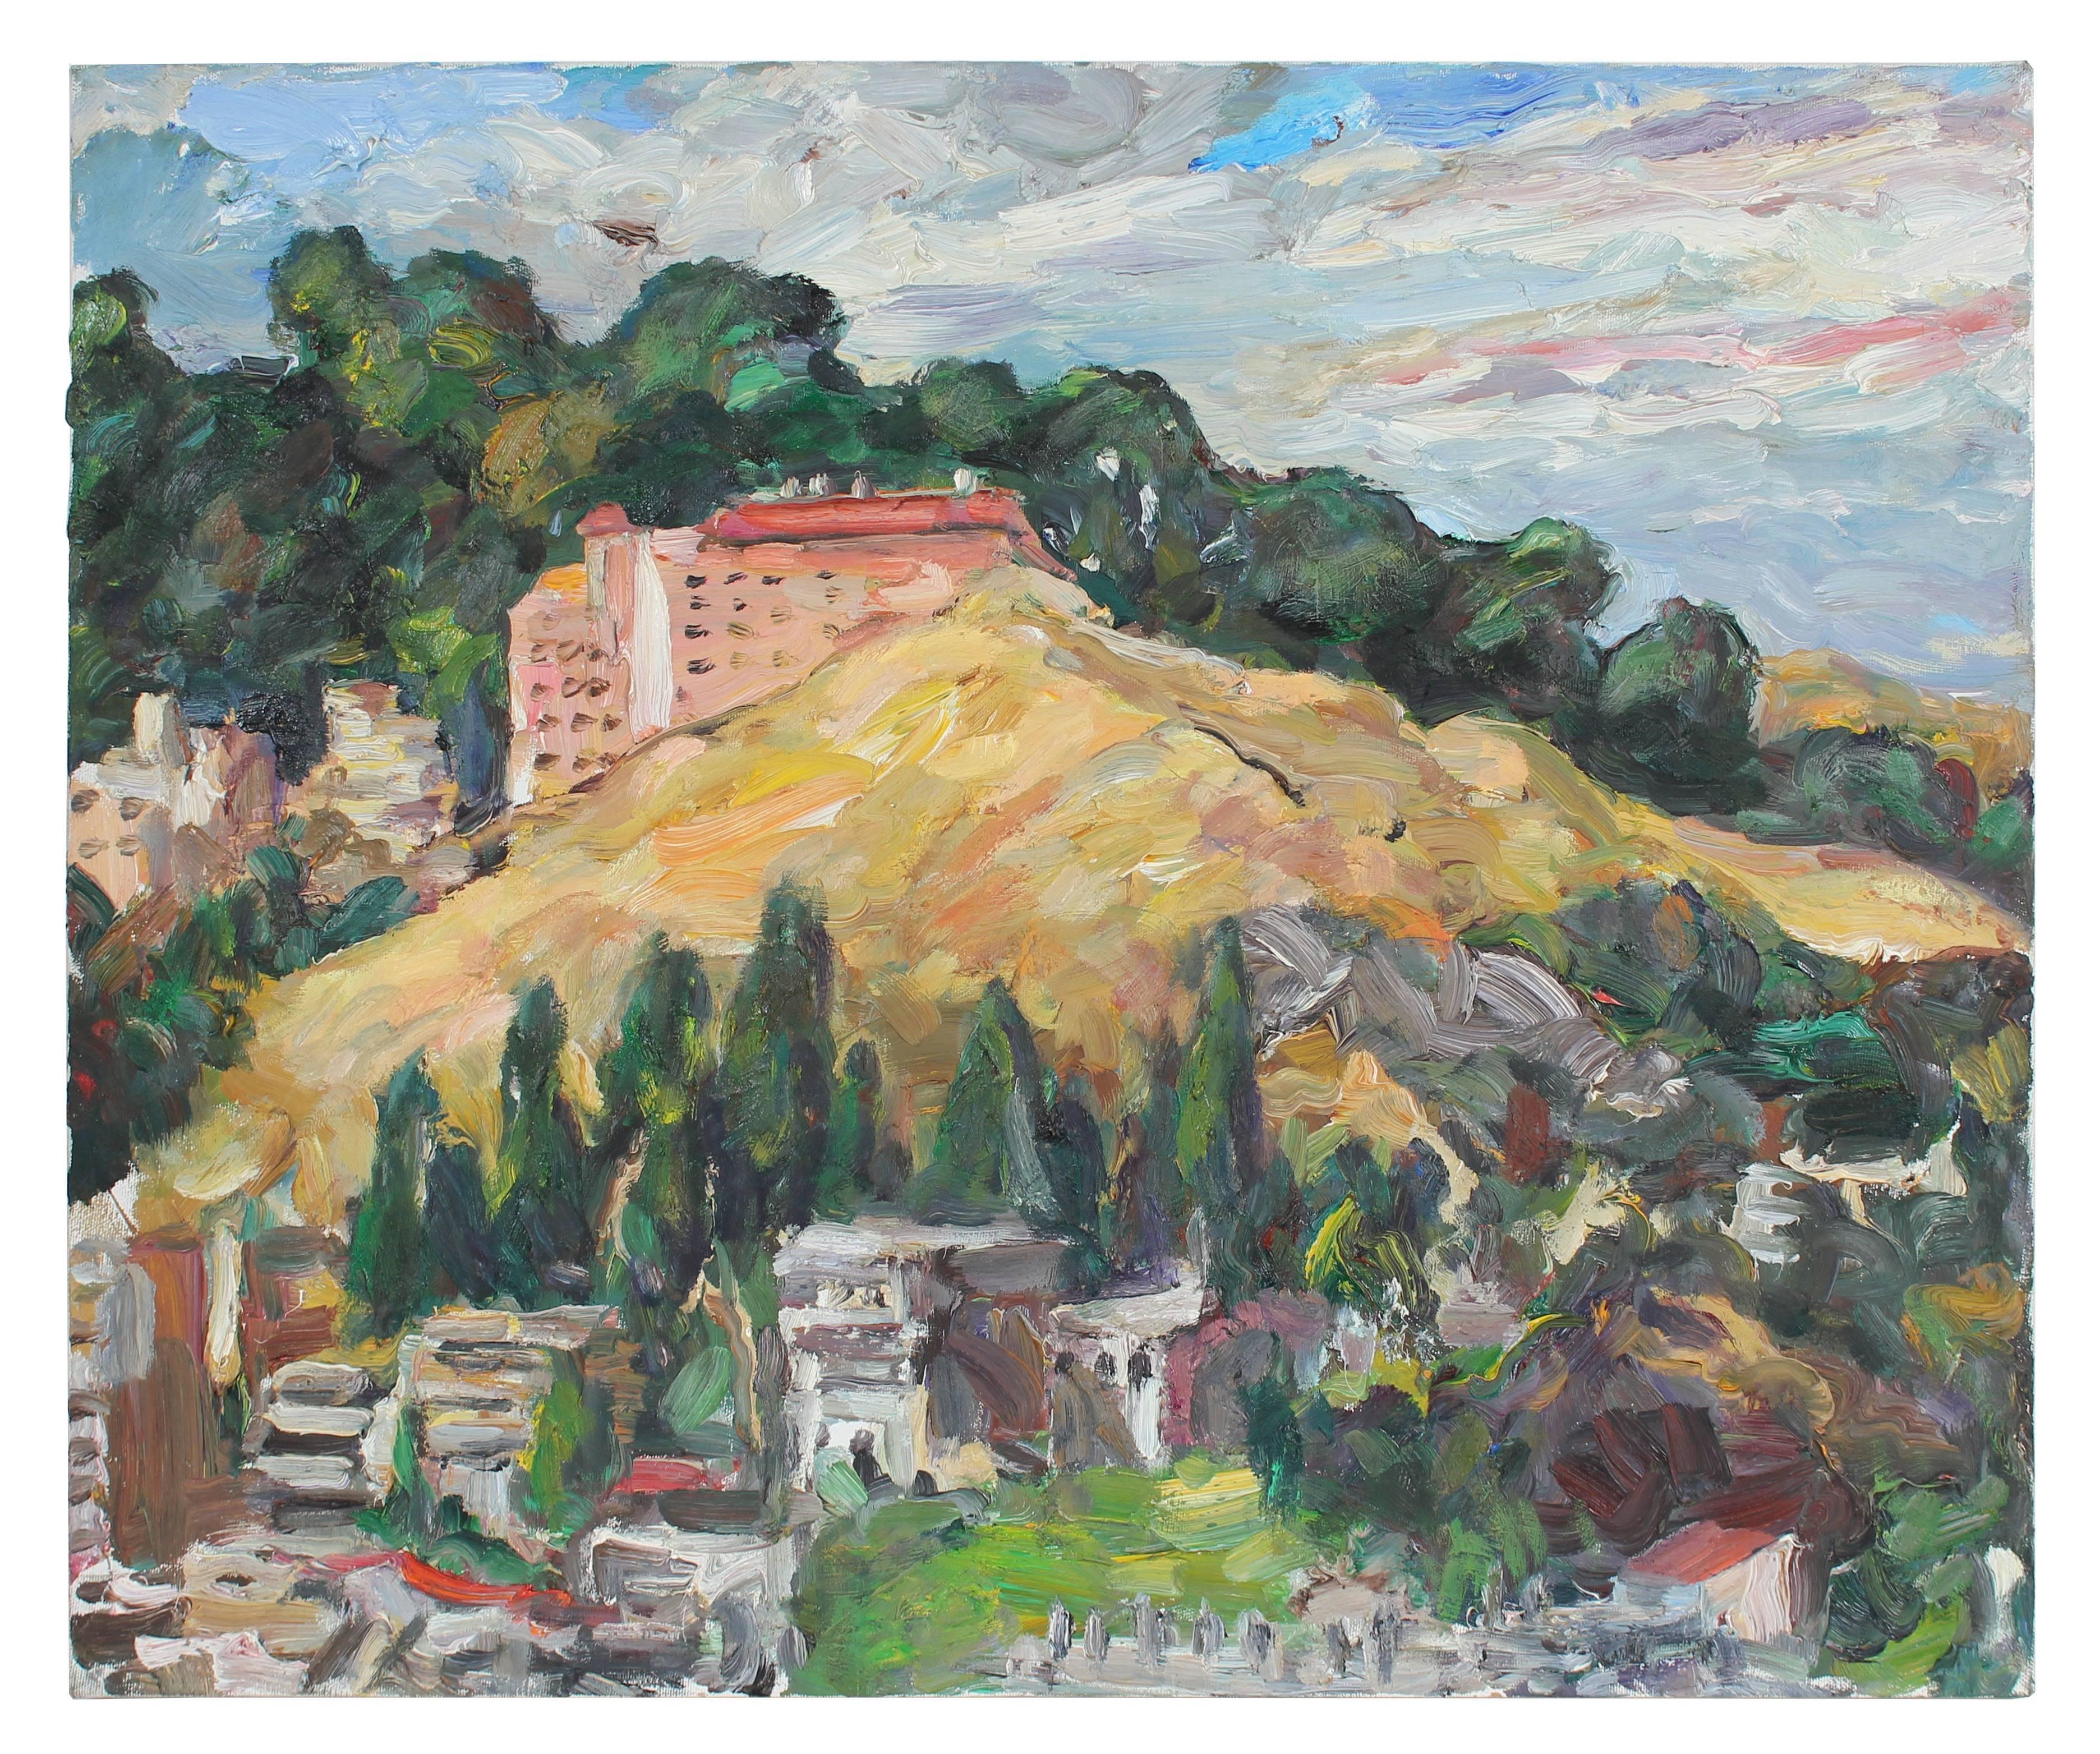 Jack Freeman Landscape Painting - "Big Condo" San Francisco Landscape, Oil on Canvas, 2006